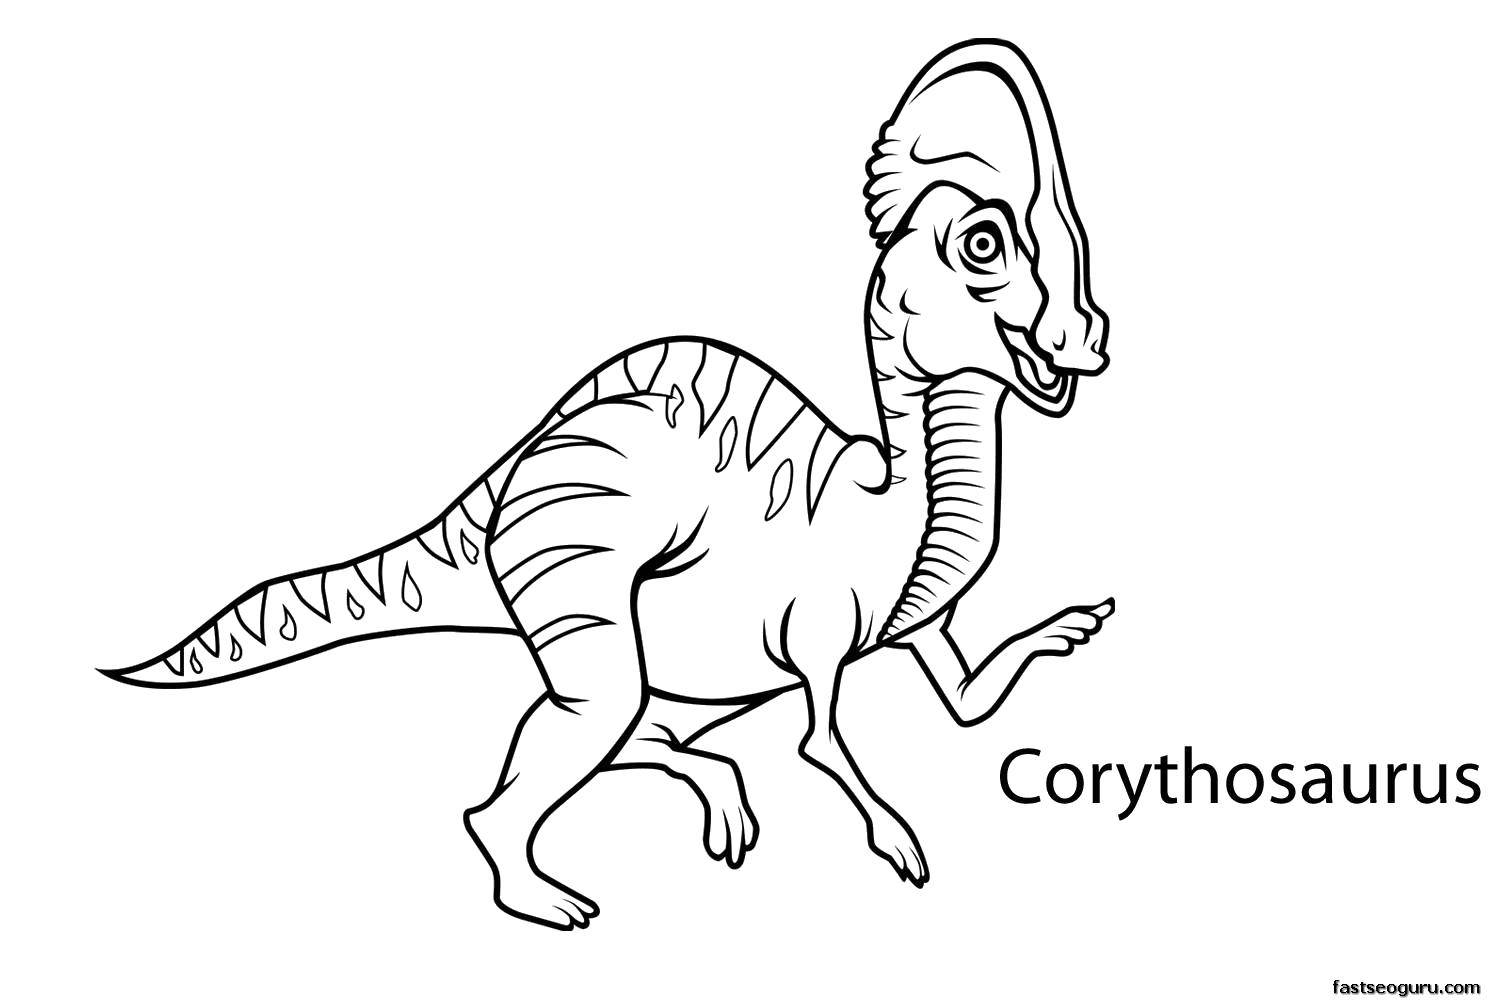 Coloring The duck-billed corythosaurus. Category dinosaur. Tags:  Dinosaurs, corythosaurus.